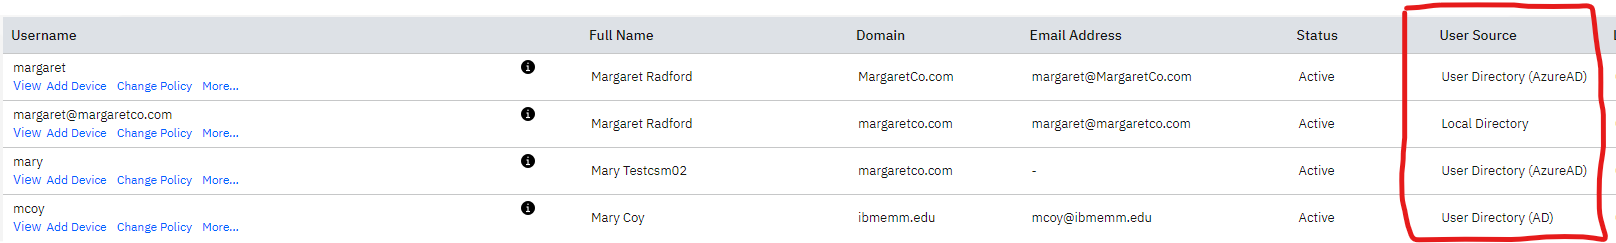 Example of User Source in MaaS360 User Directory